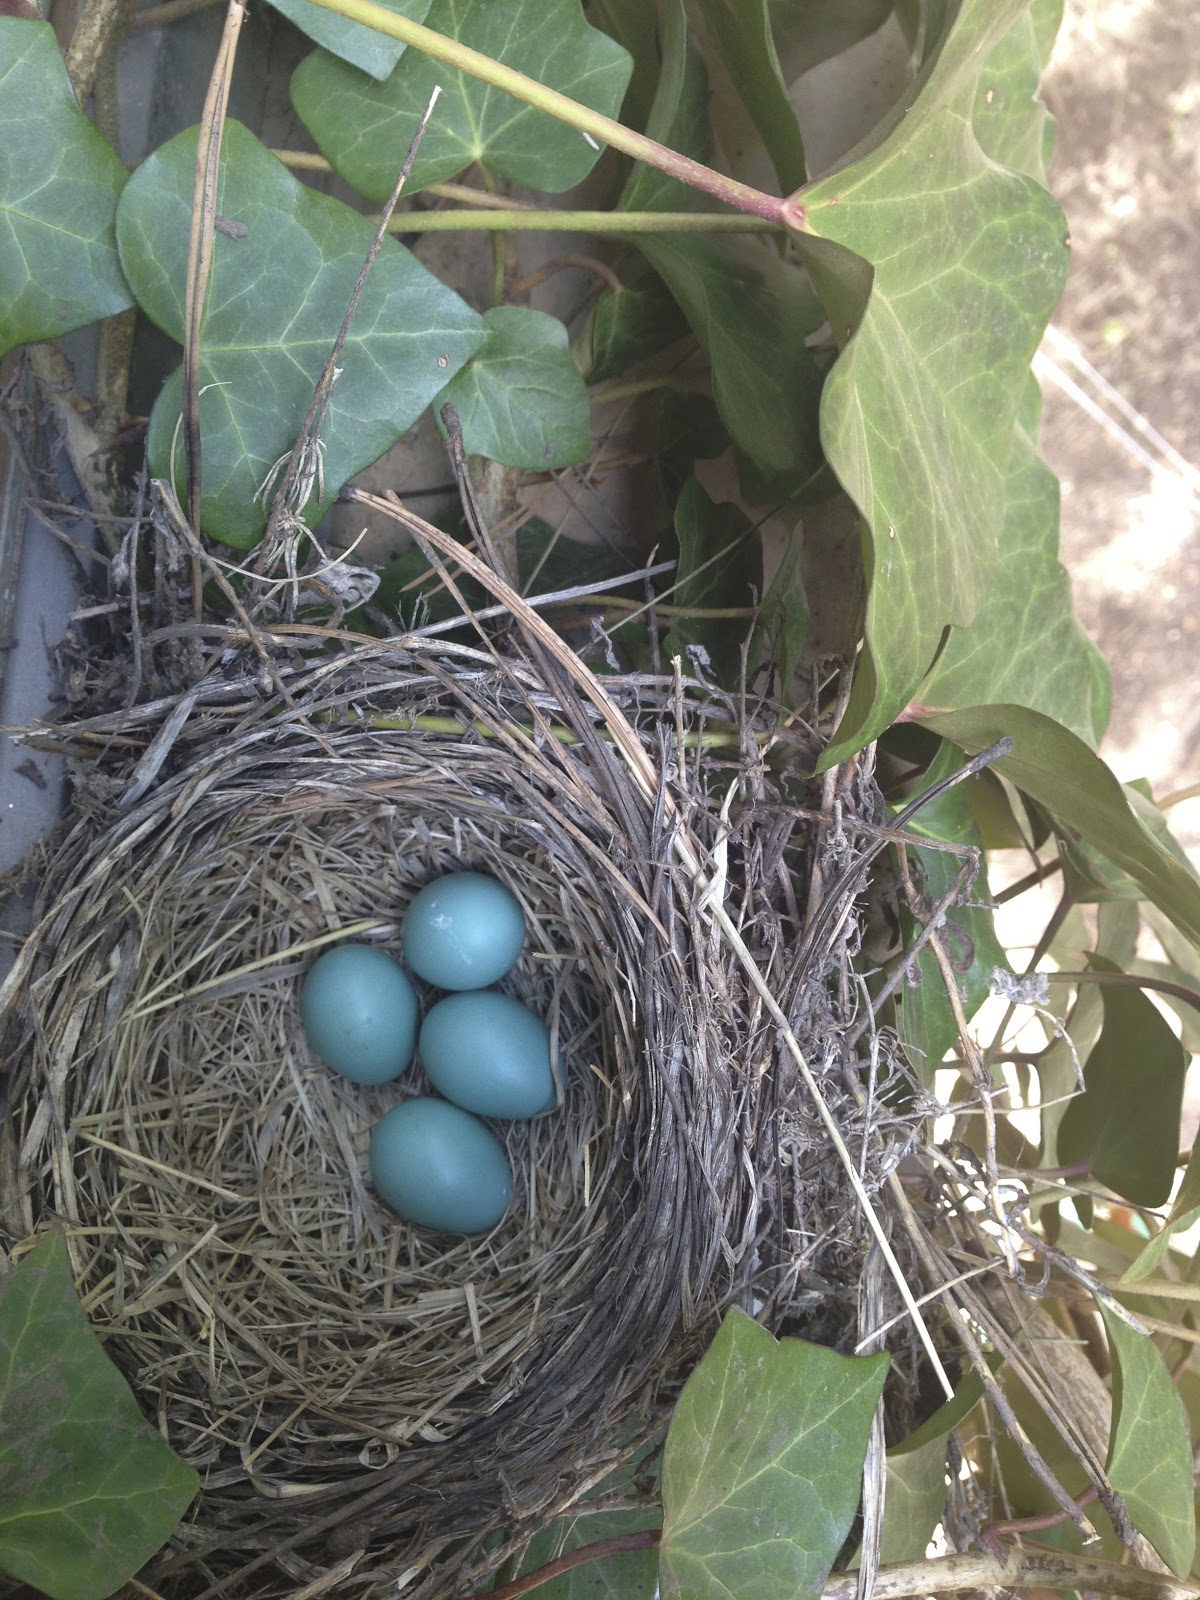 Three blue eggs in a bird nest.